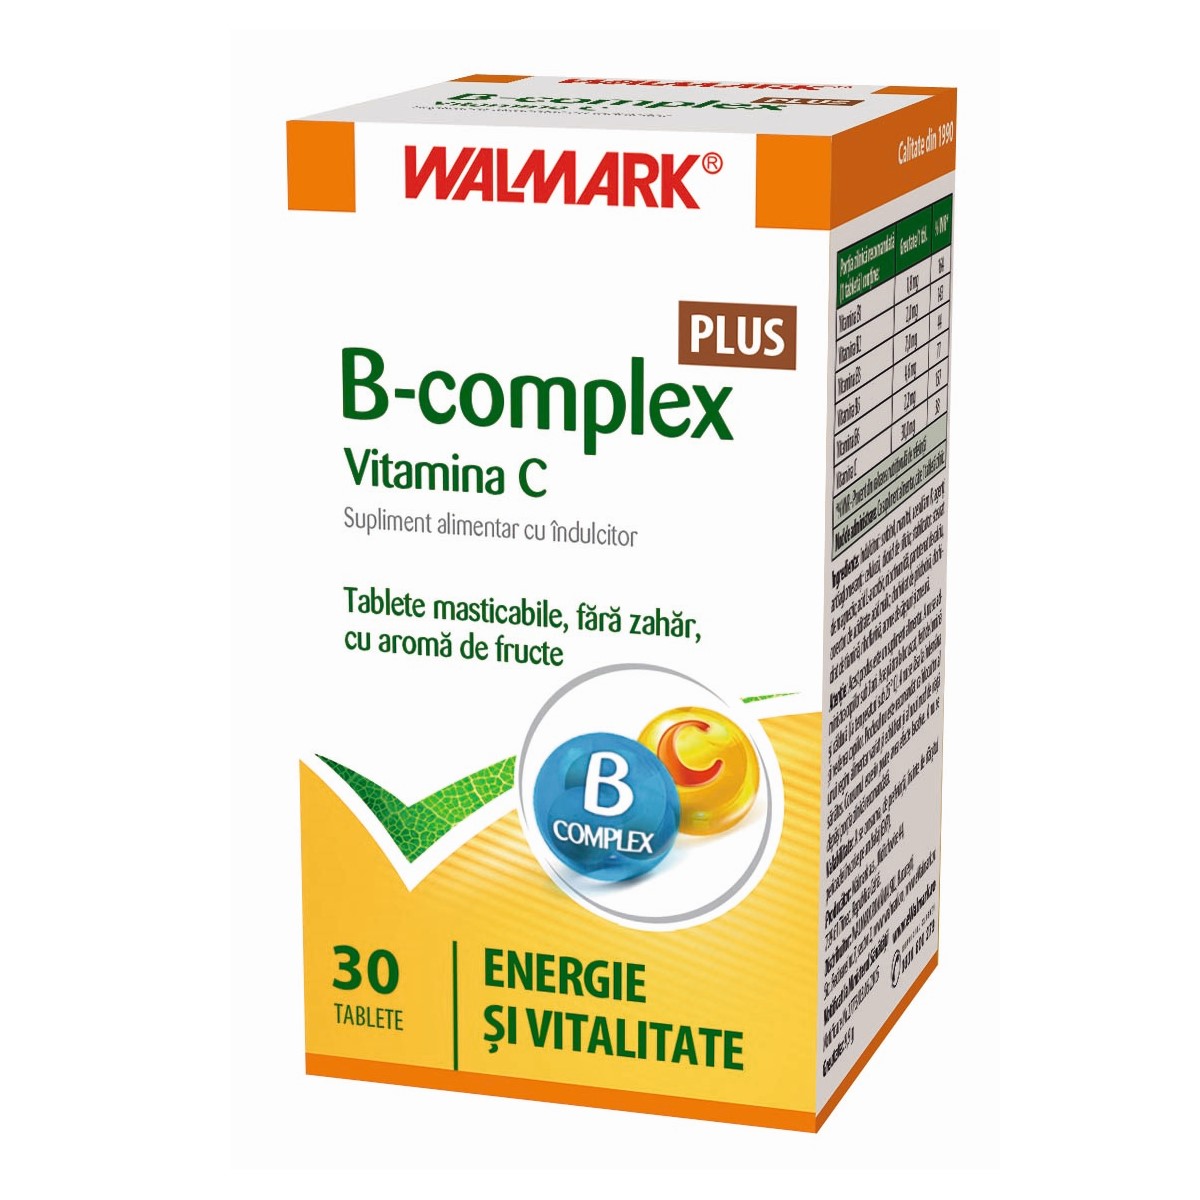 Vitamine, minerale si antioxidanti - W B Complex+Vit C,  30 Tablete Masticabile, farmacieieftina.ro